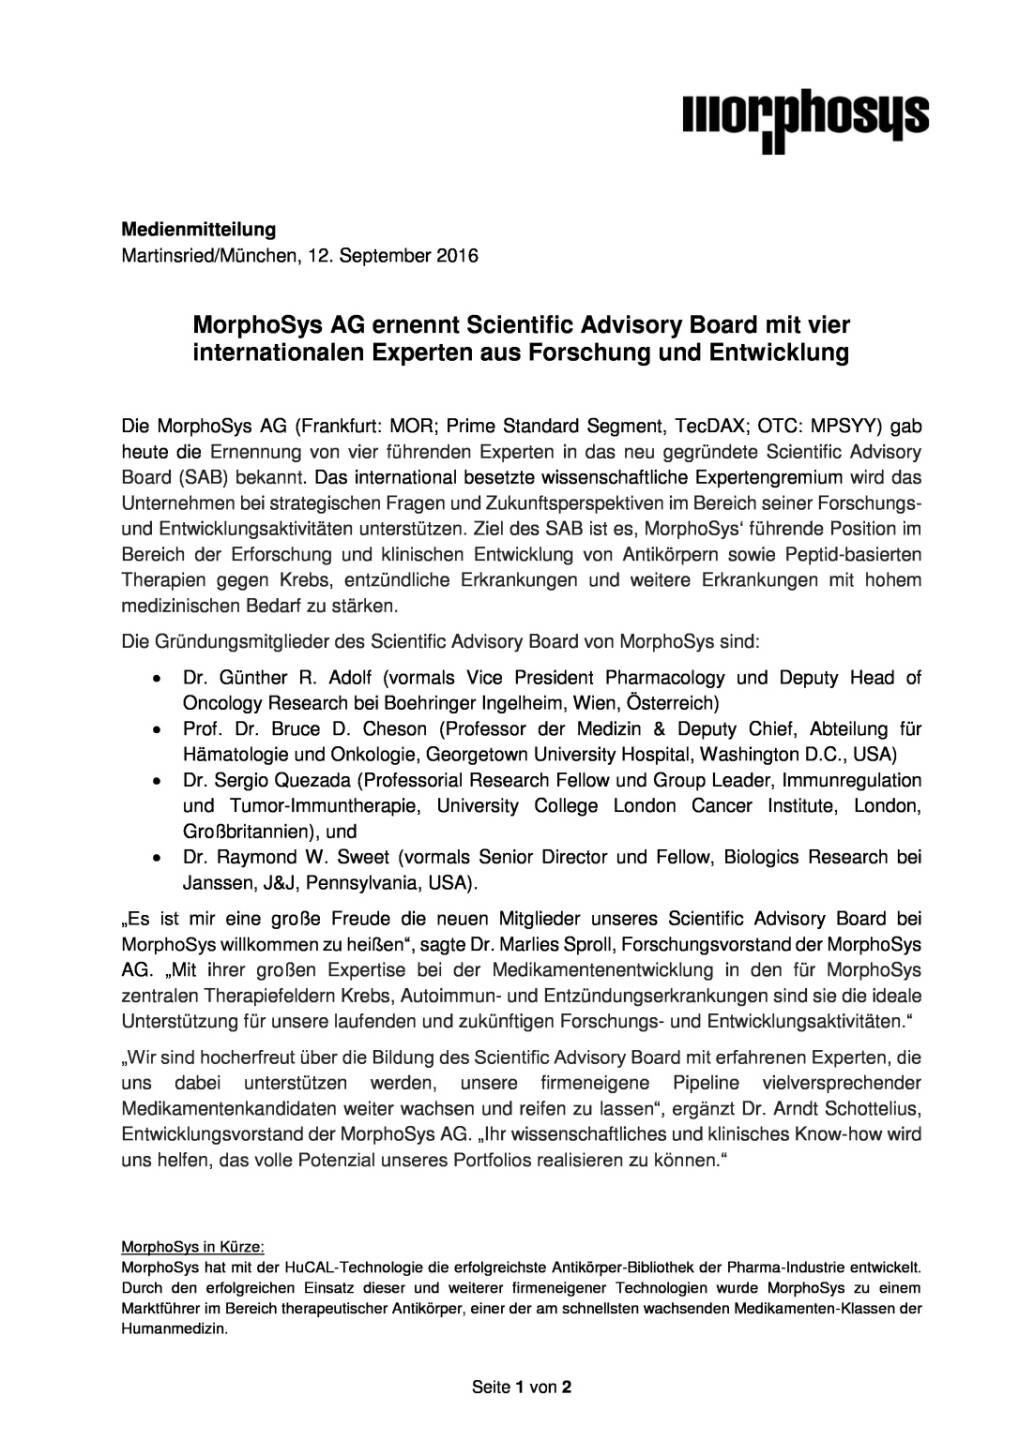 MorphoSys AG: Scientific Advisory Board, Seite 1/2, komplettes Dokument unter http://boerse-social.com/static/uploads/file_1760_morphosys_ag_scientific_advisory_board.pdf